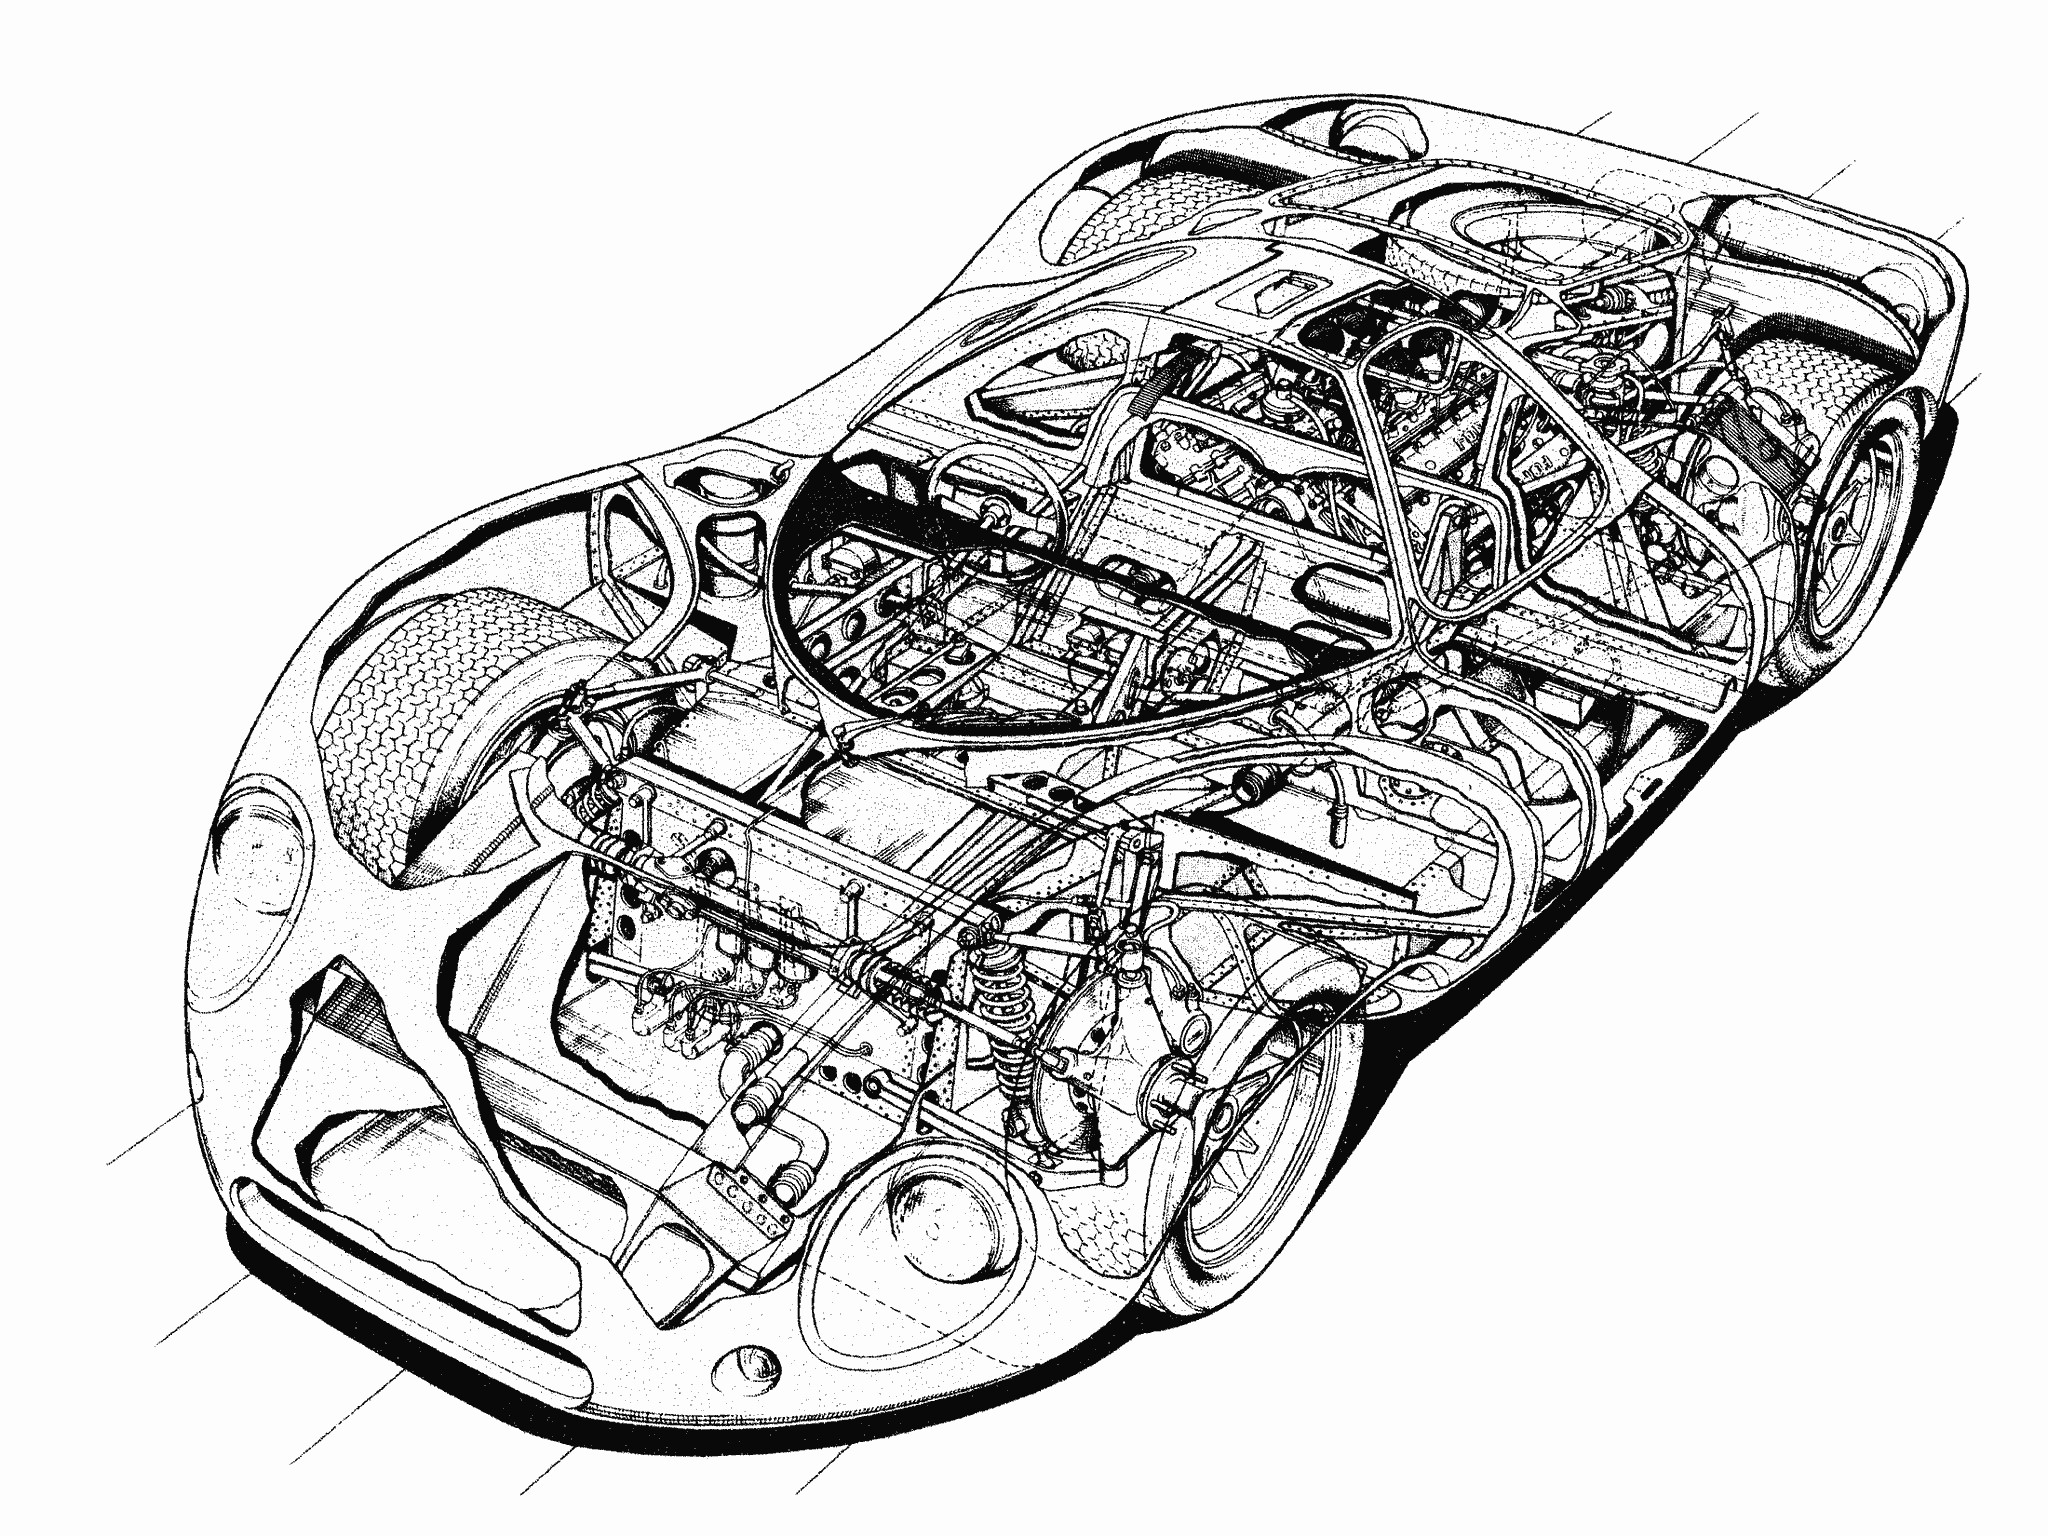 Ford P68 cutaway drawing